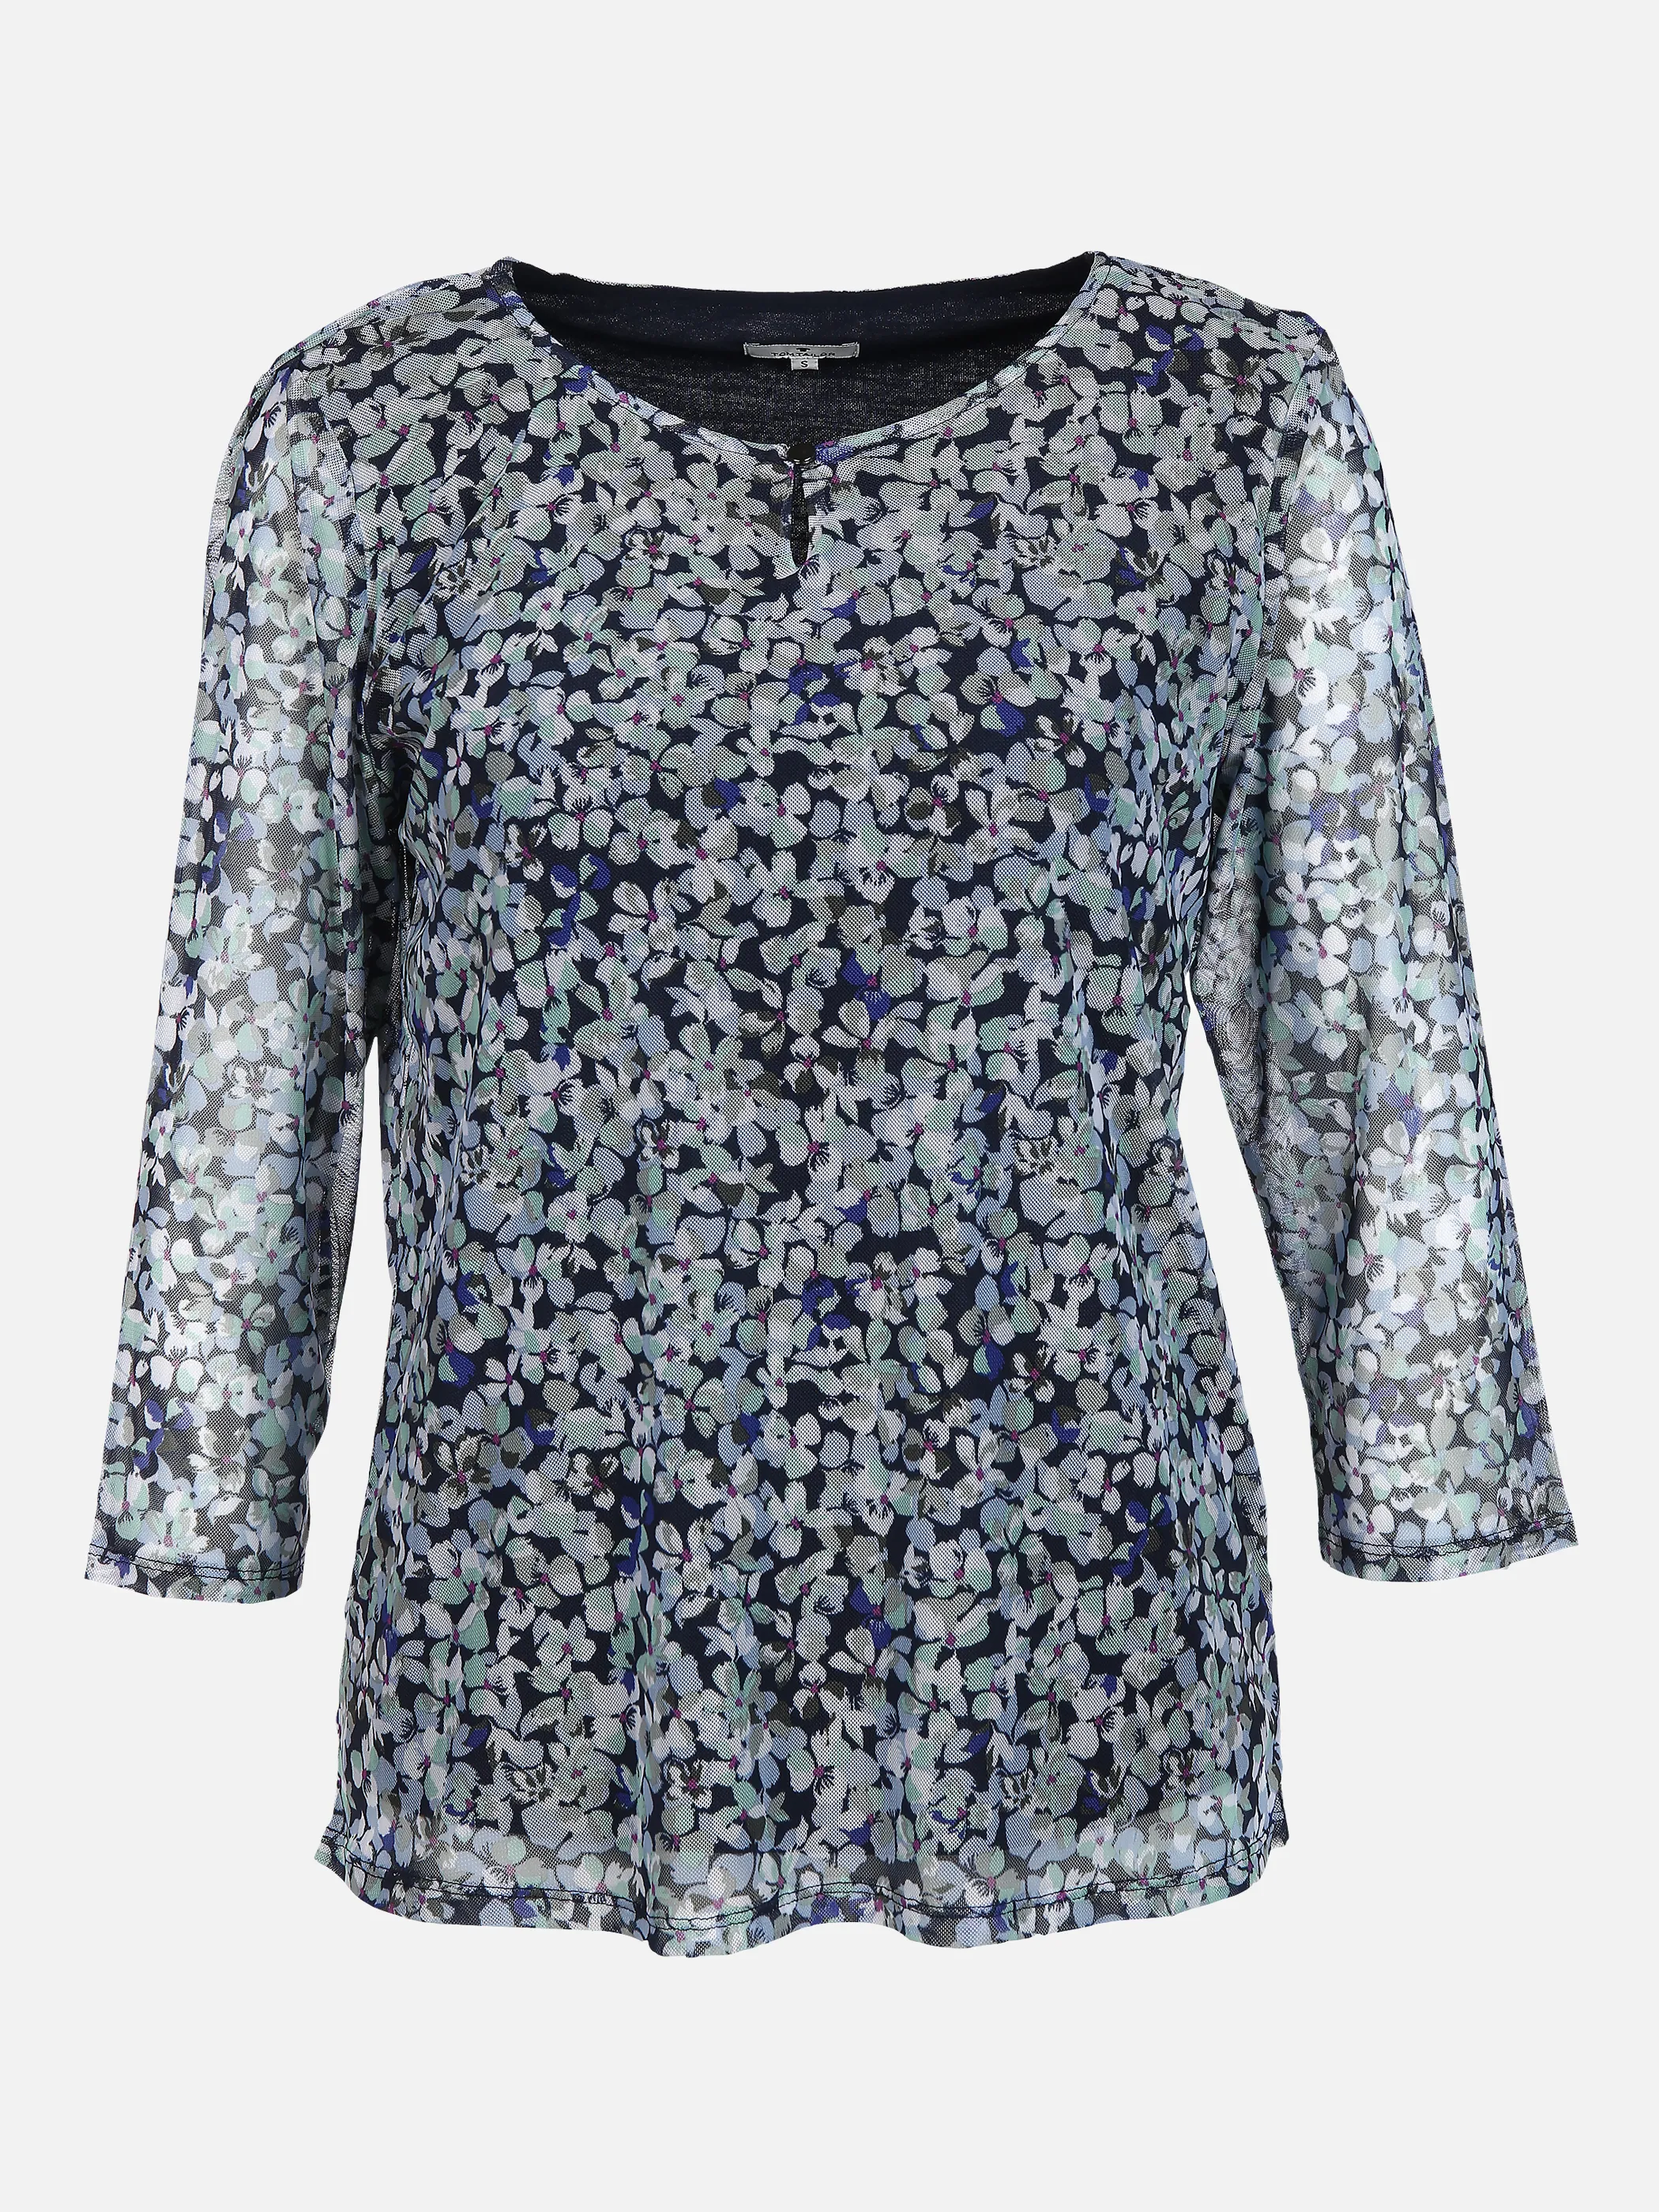 Tom Tailor 1025280 T-shirt mesh blouse Blau 850255 27263 1